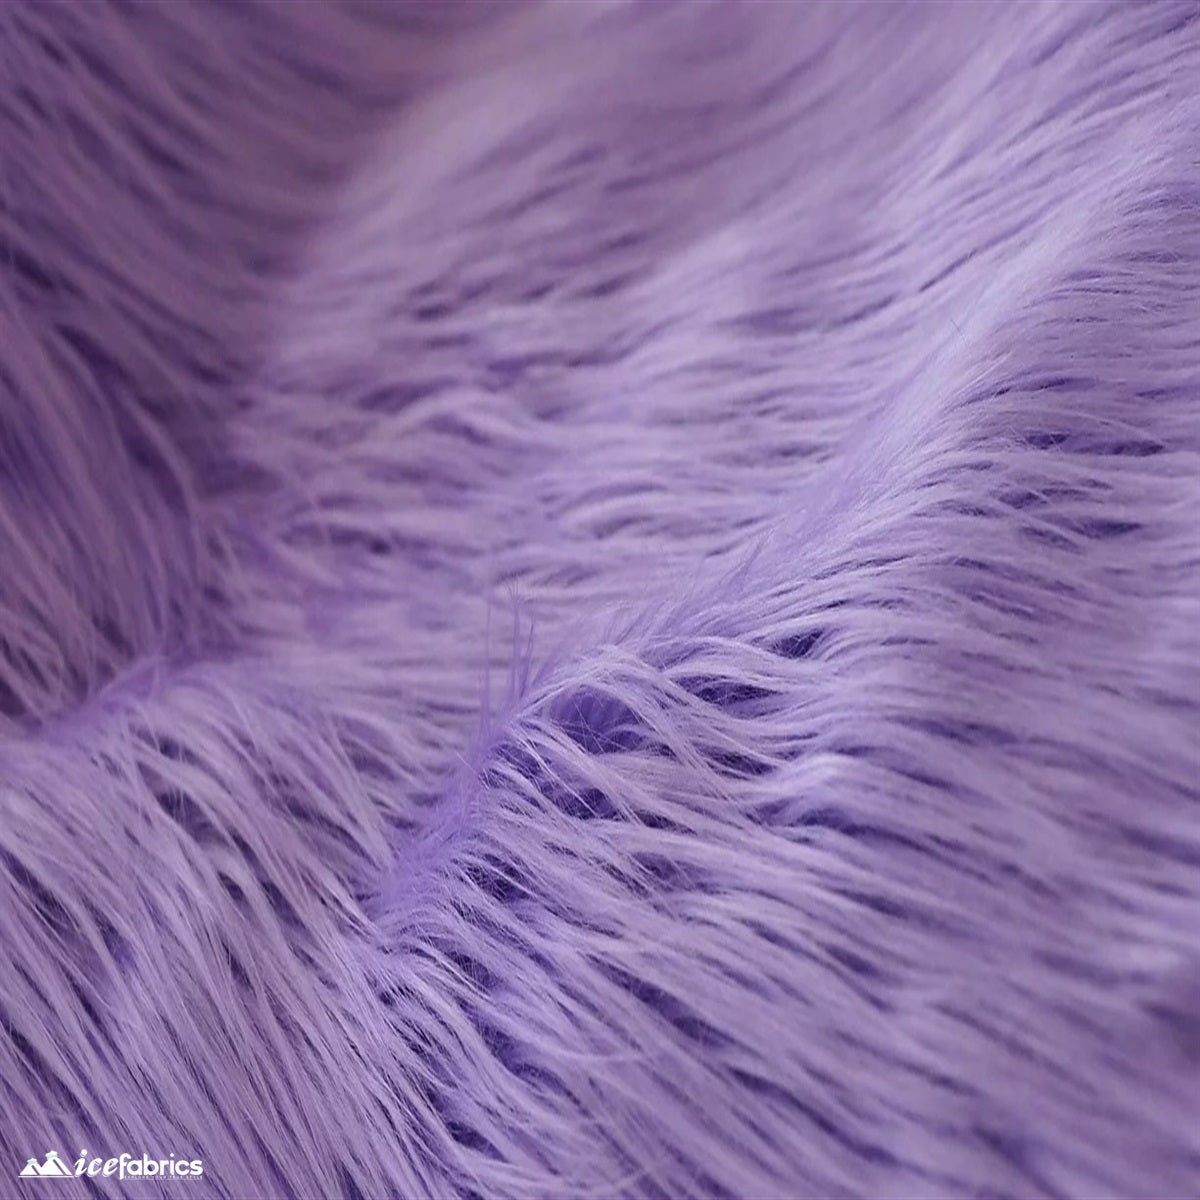 Shaggy Mohair Faux Fur Fabric/ 4 Inches Long PileICE FABRICSICE FABRICSLilac1/2 Yard (60 inches Wide)Shaggy Mohair Faux Fur Fabric/ 4 Inches Long Pile ICE FABRICS